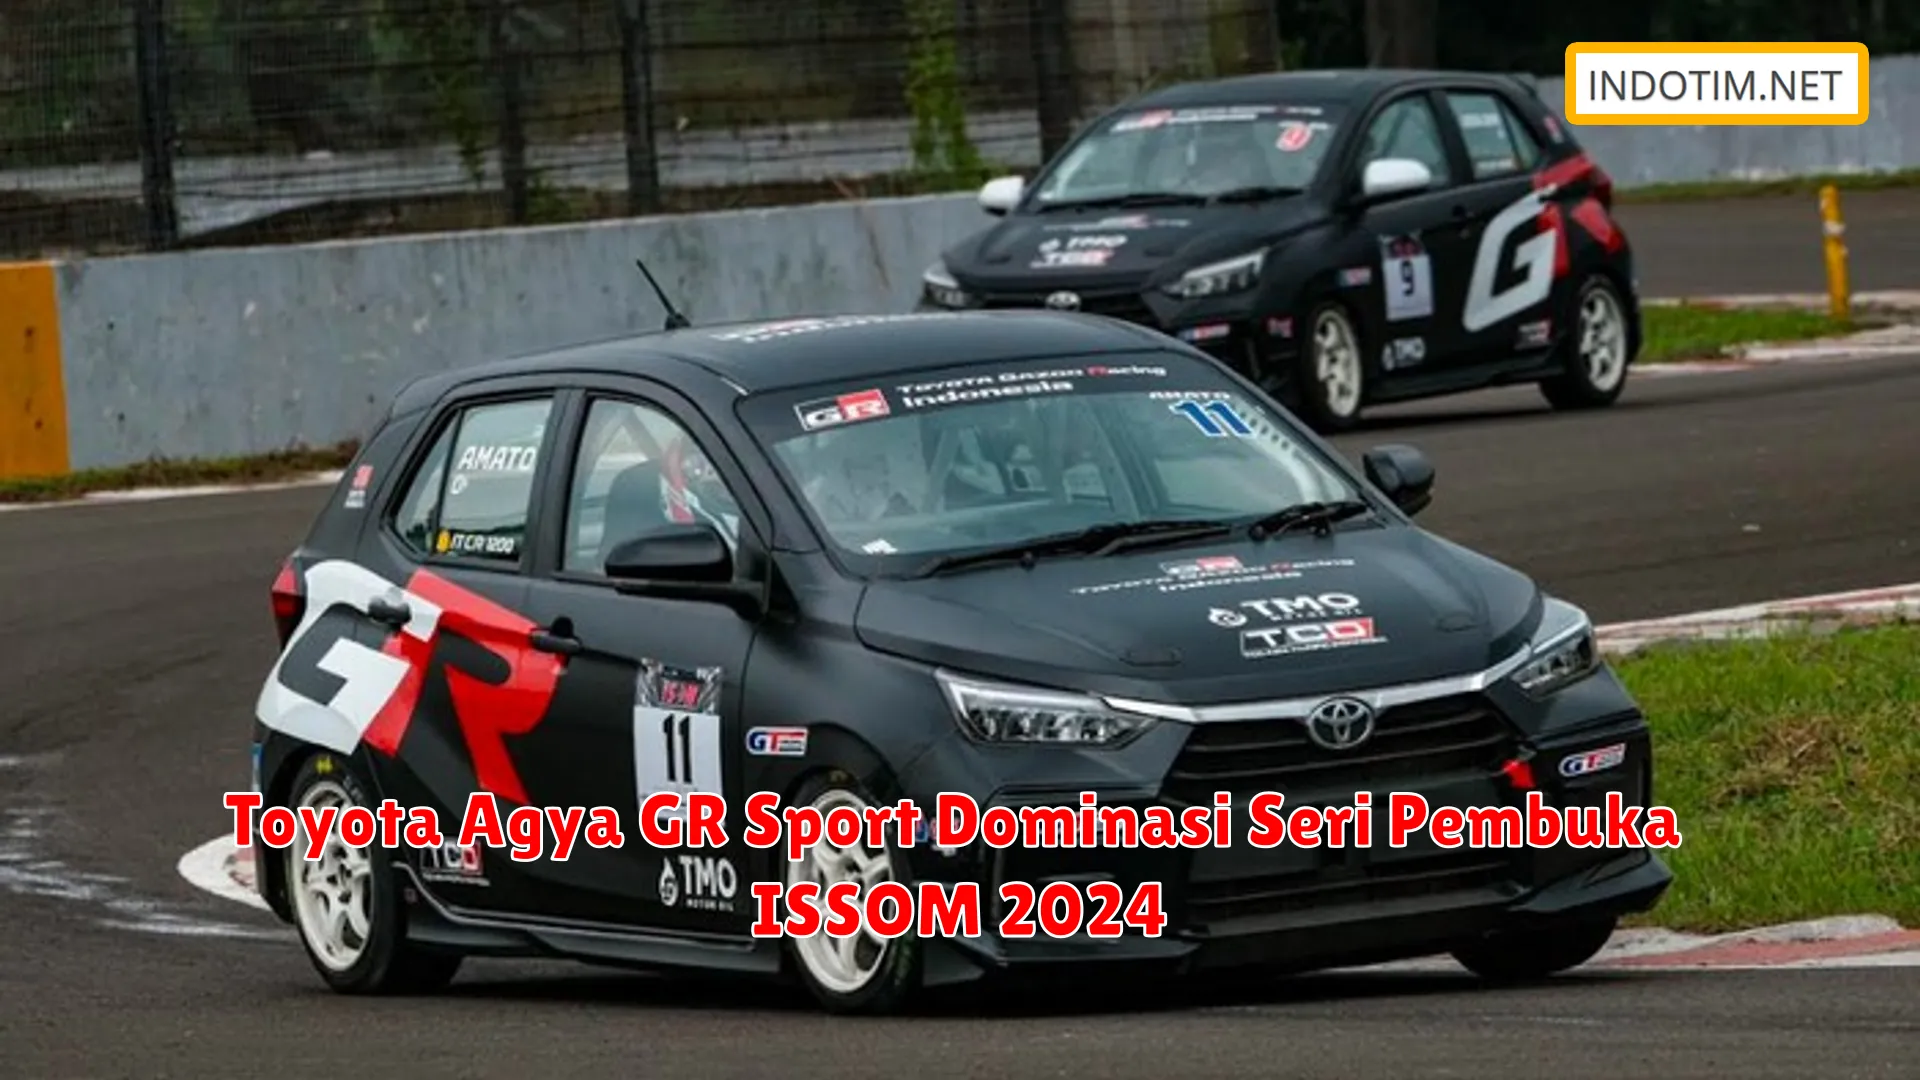 Toyota Agya GR Sport Dominasi Seri Pembuka ISSOM 2024